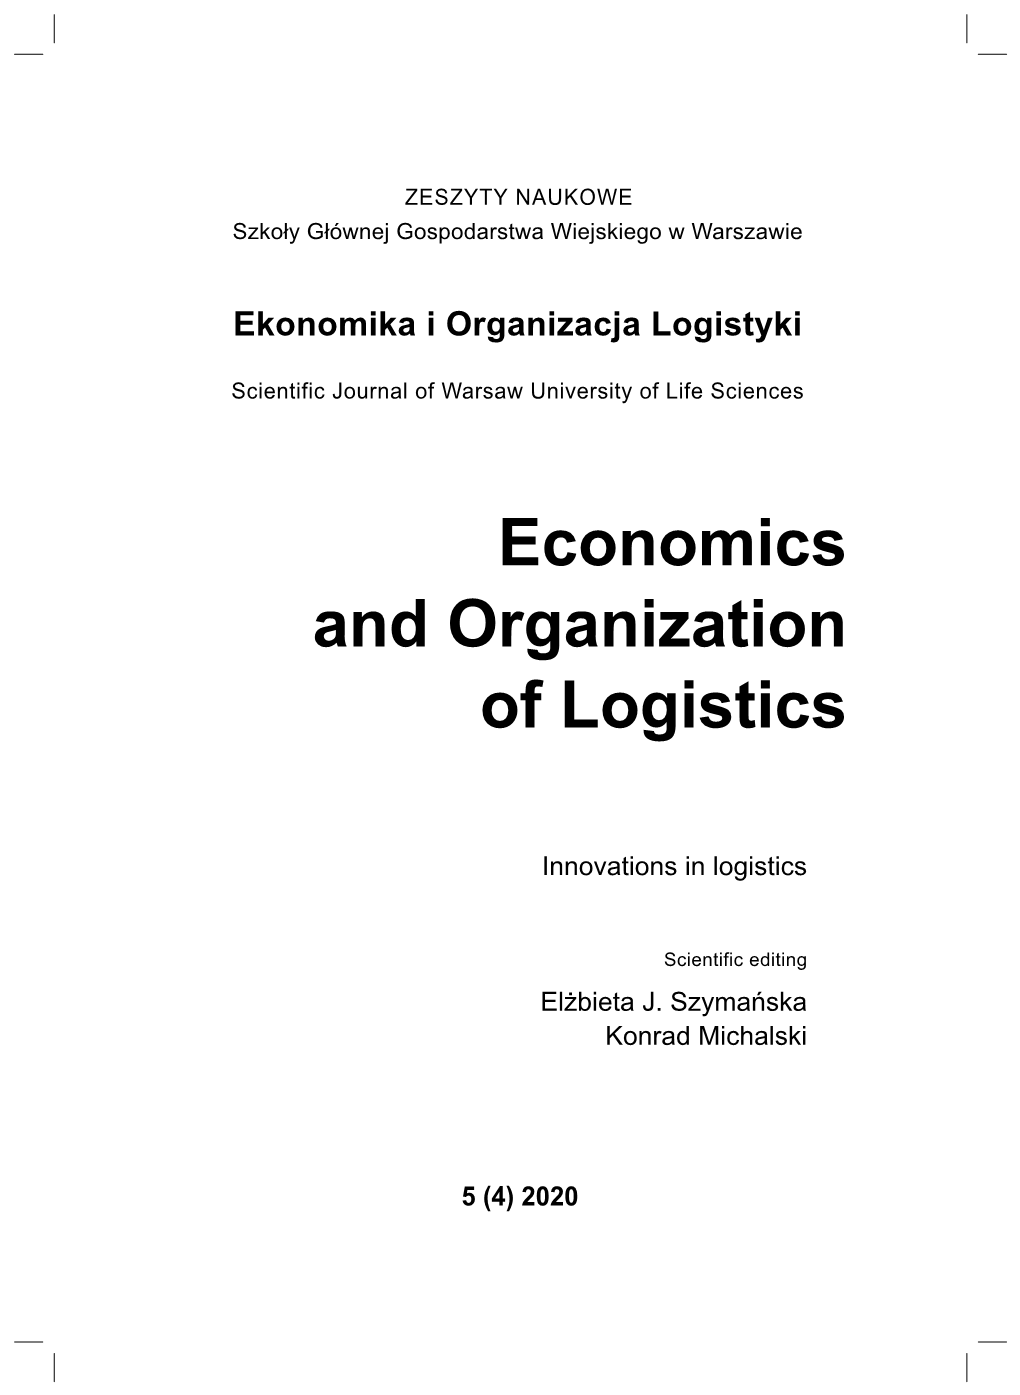 Economics and Organization of Logistics